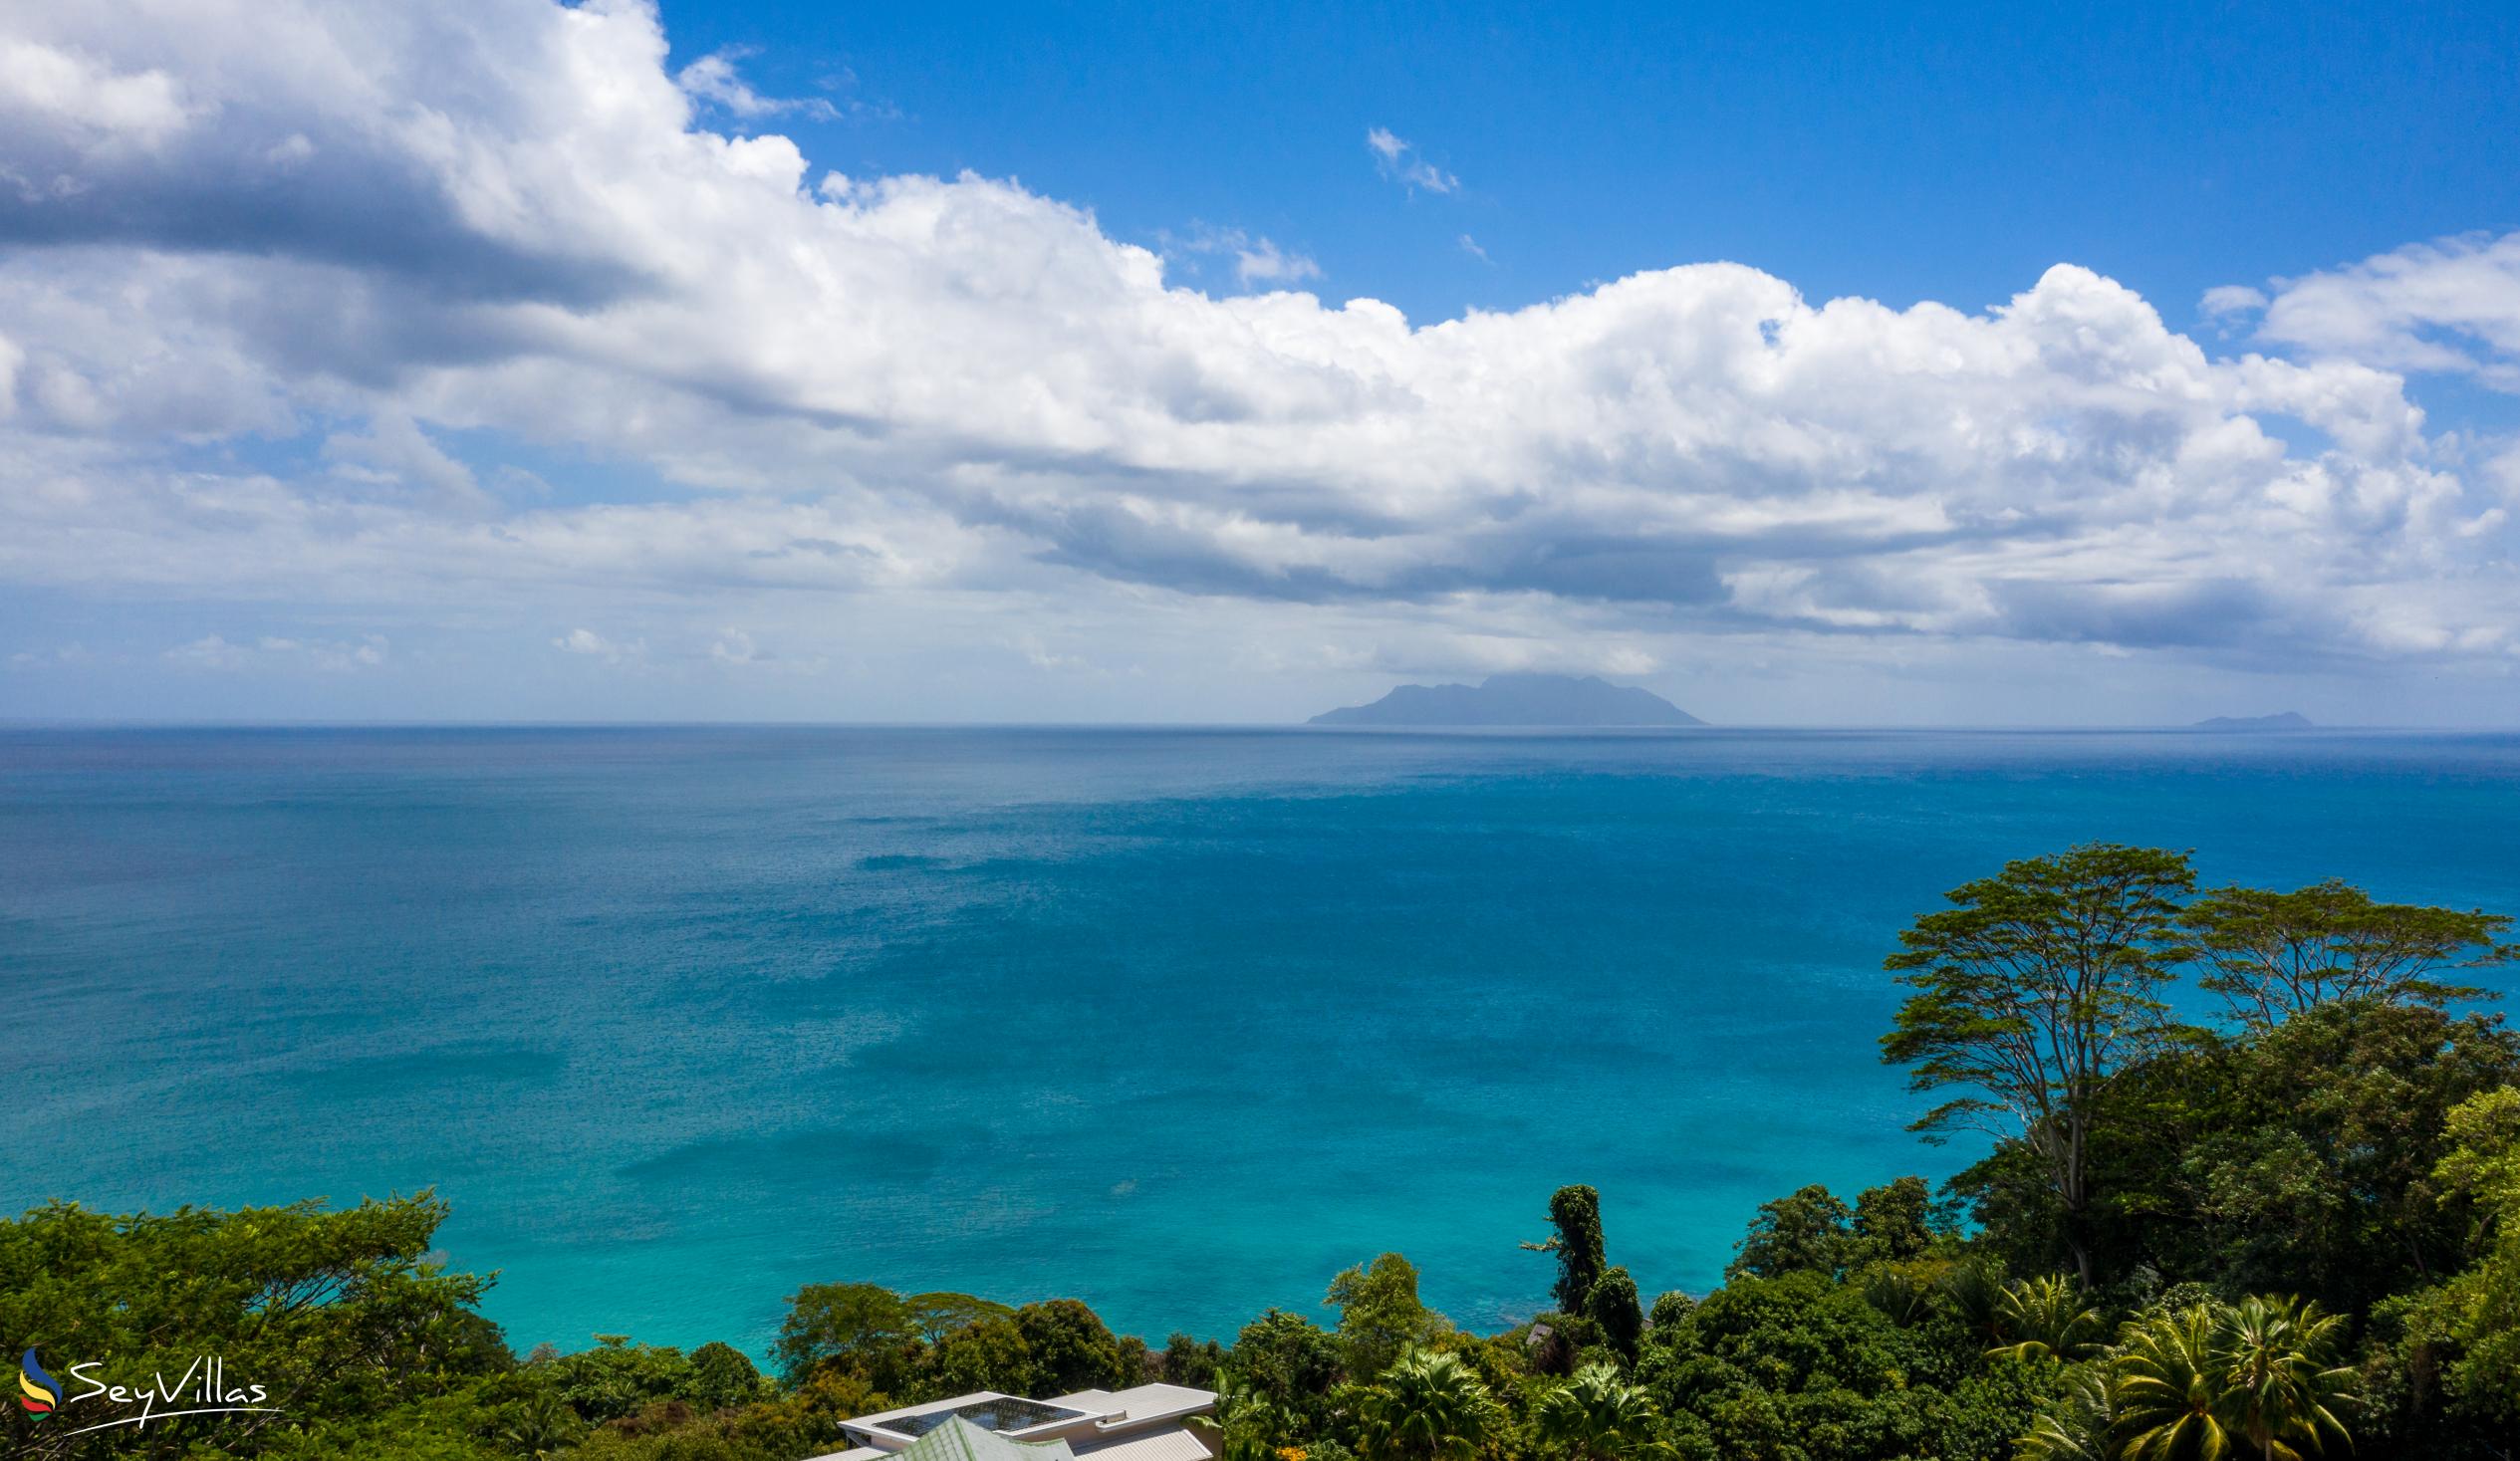 Photo 19: Reve Bleu - Location - Mahé (Seychelles)